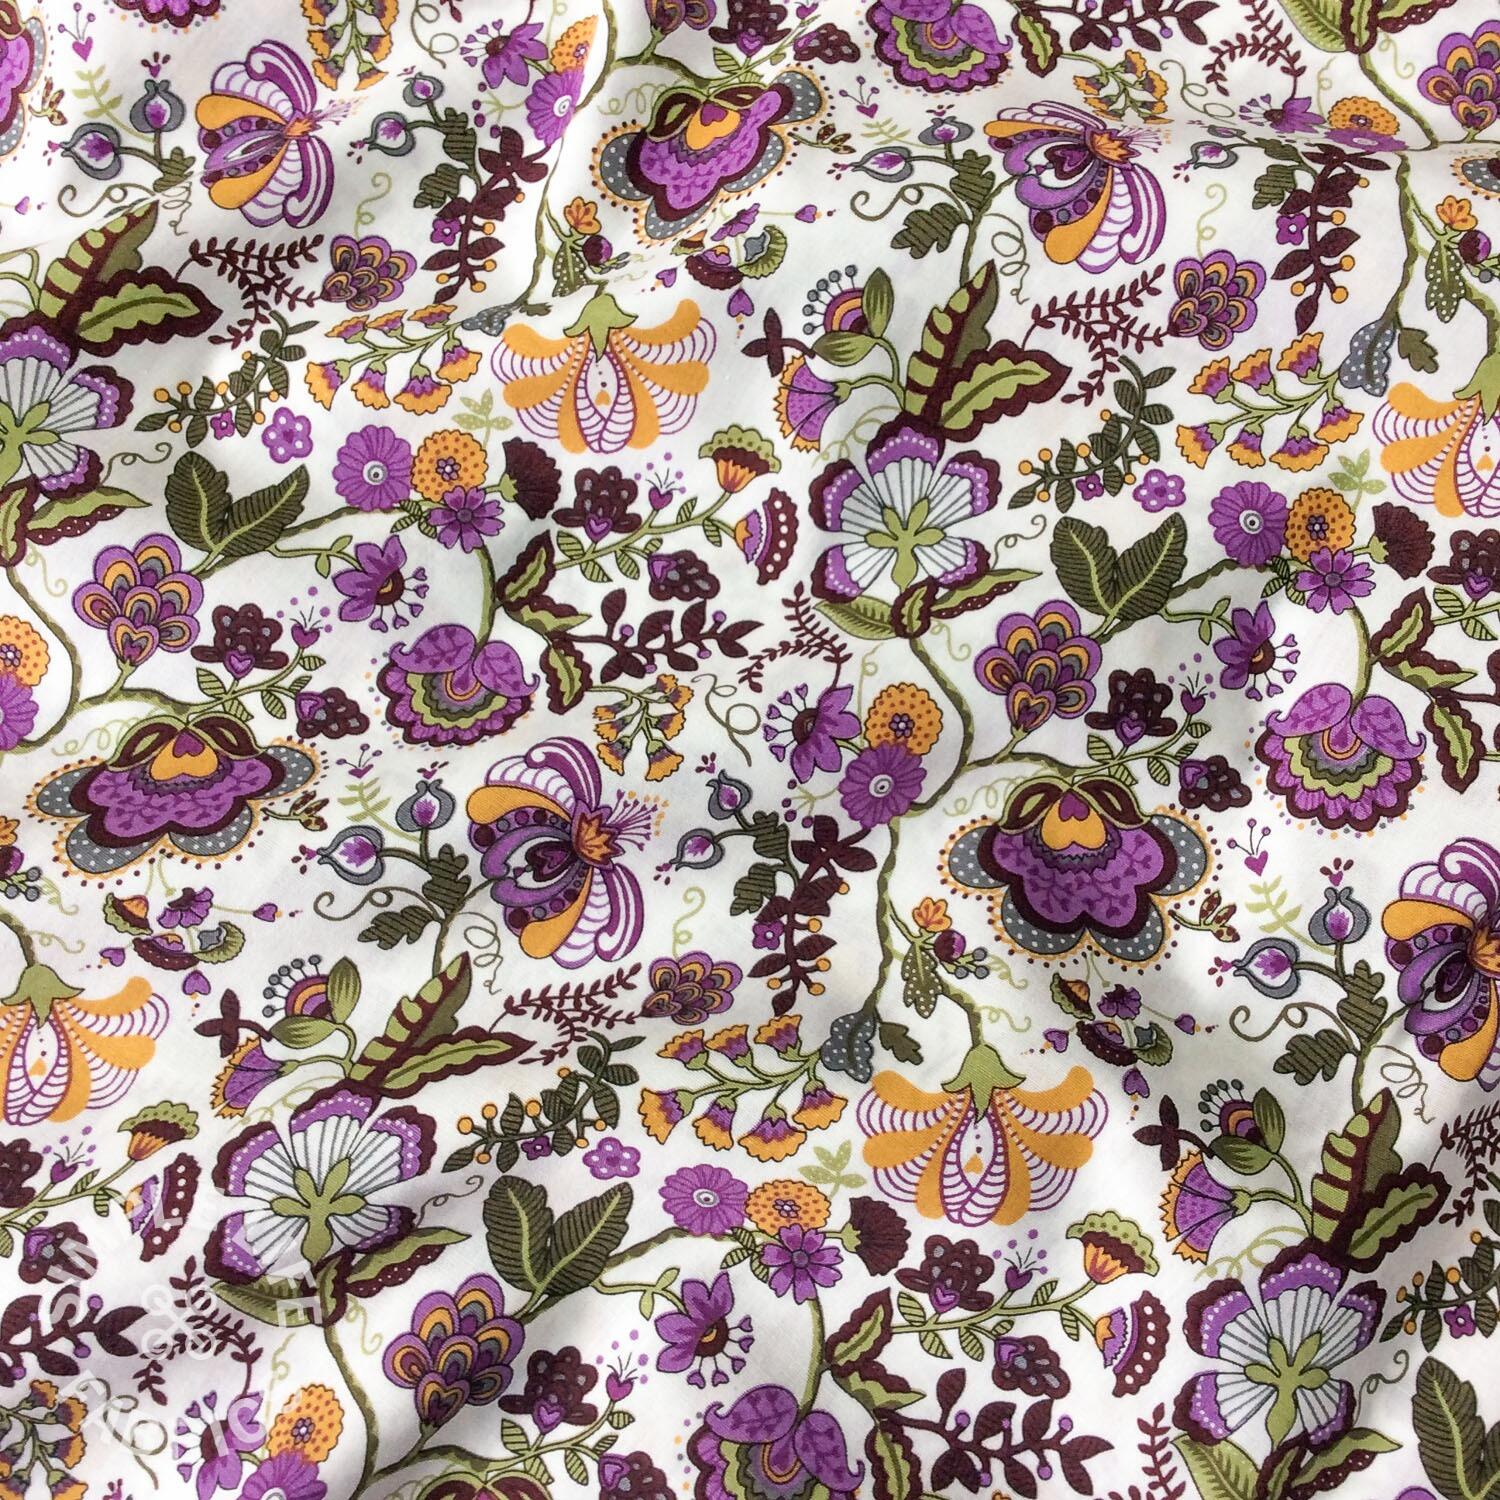 Morris style floral cotton fabric